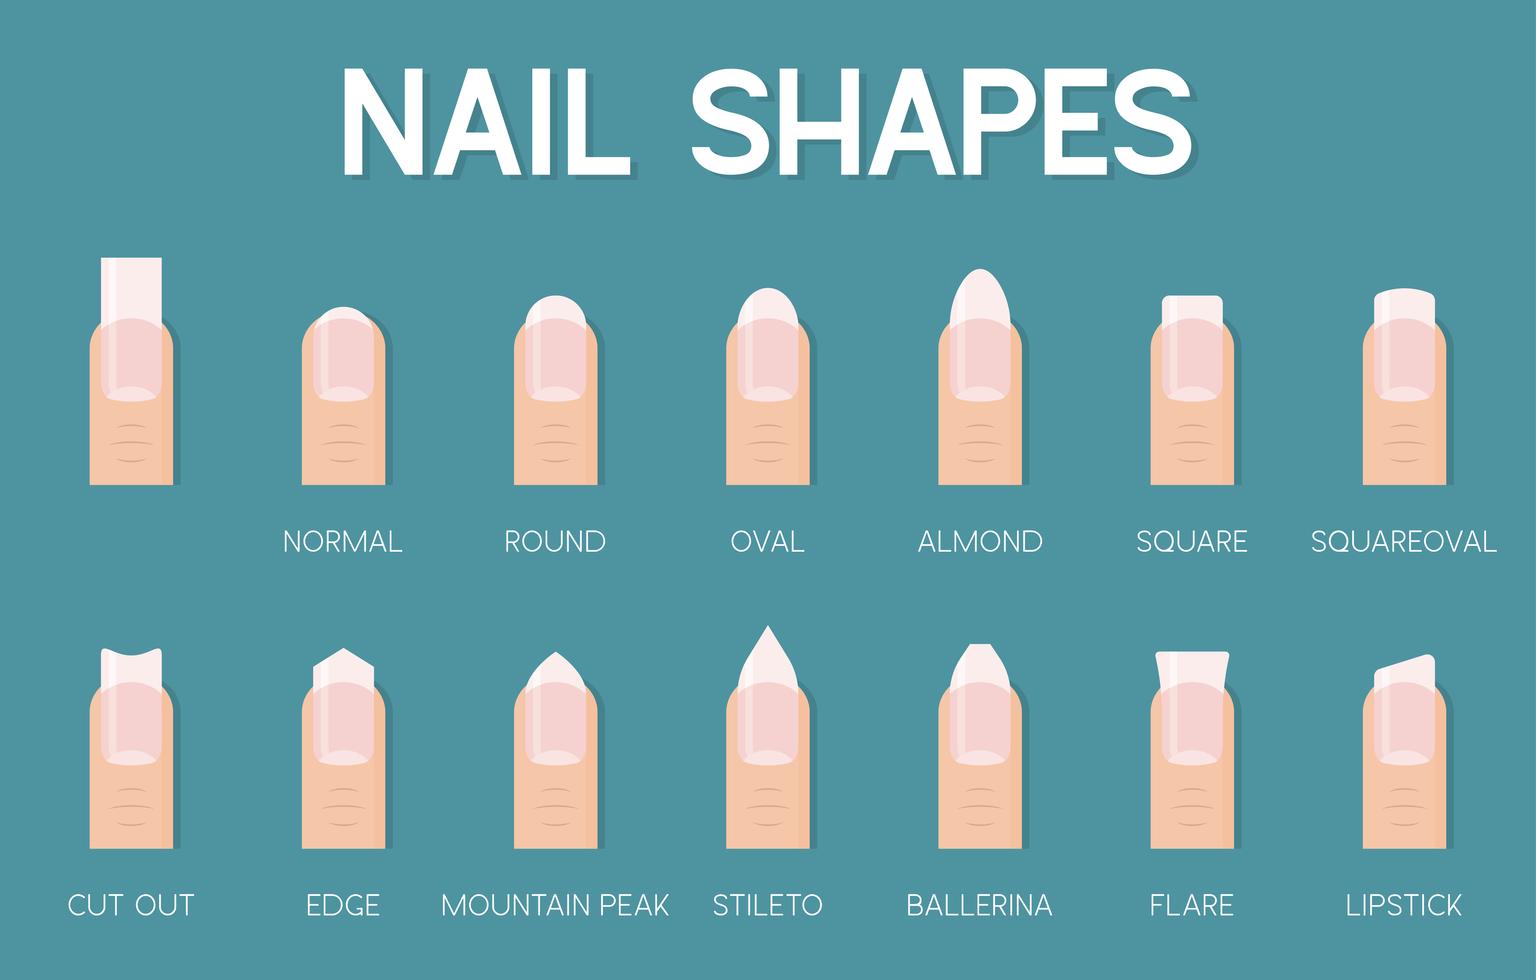 4. "Tumblr Nail Art Inspiration: Diamond Shapes" - wide 1